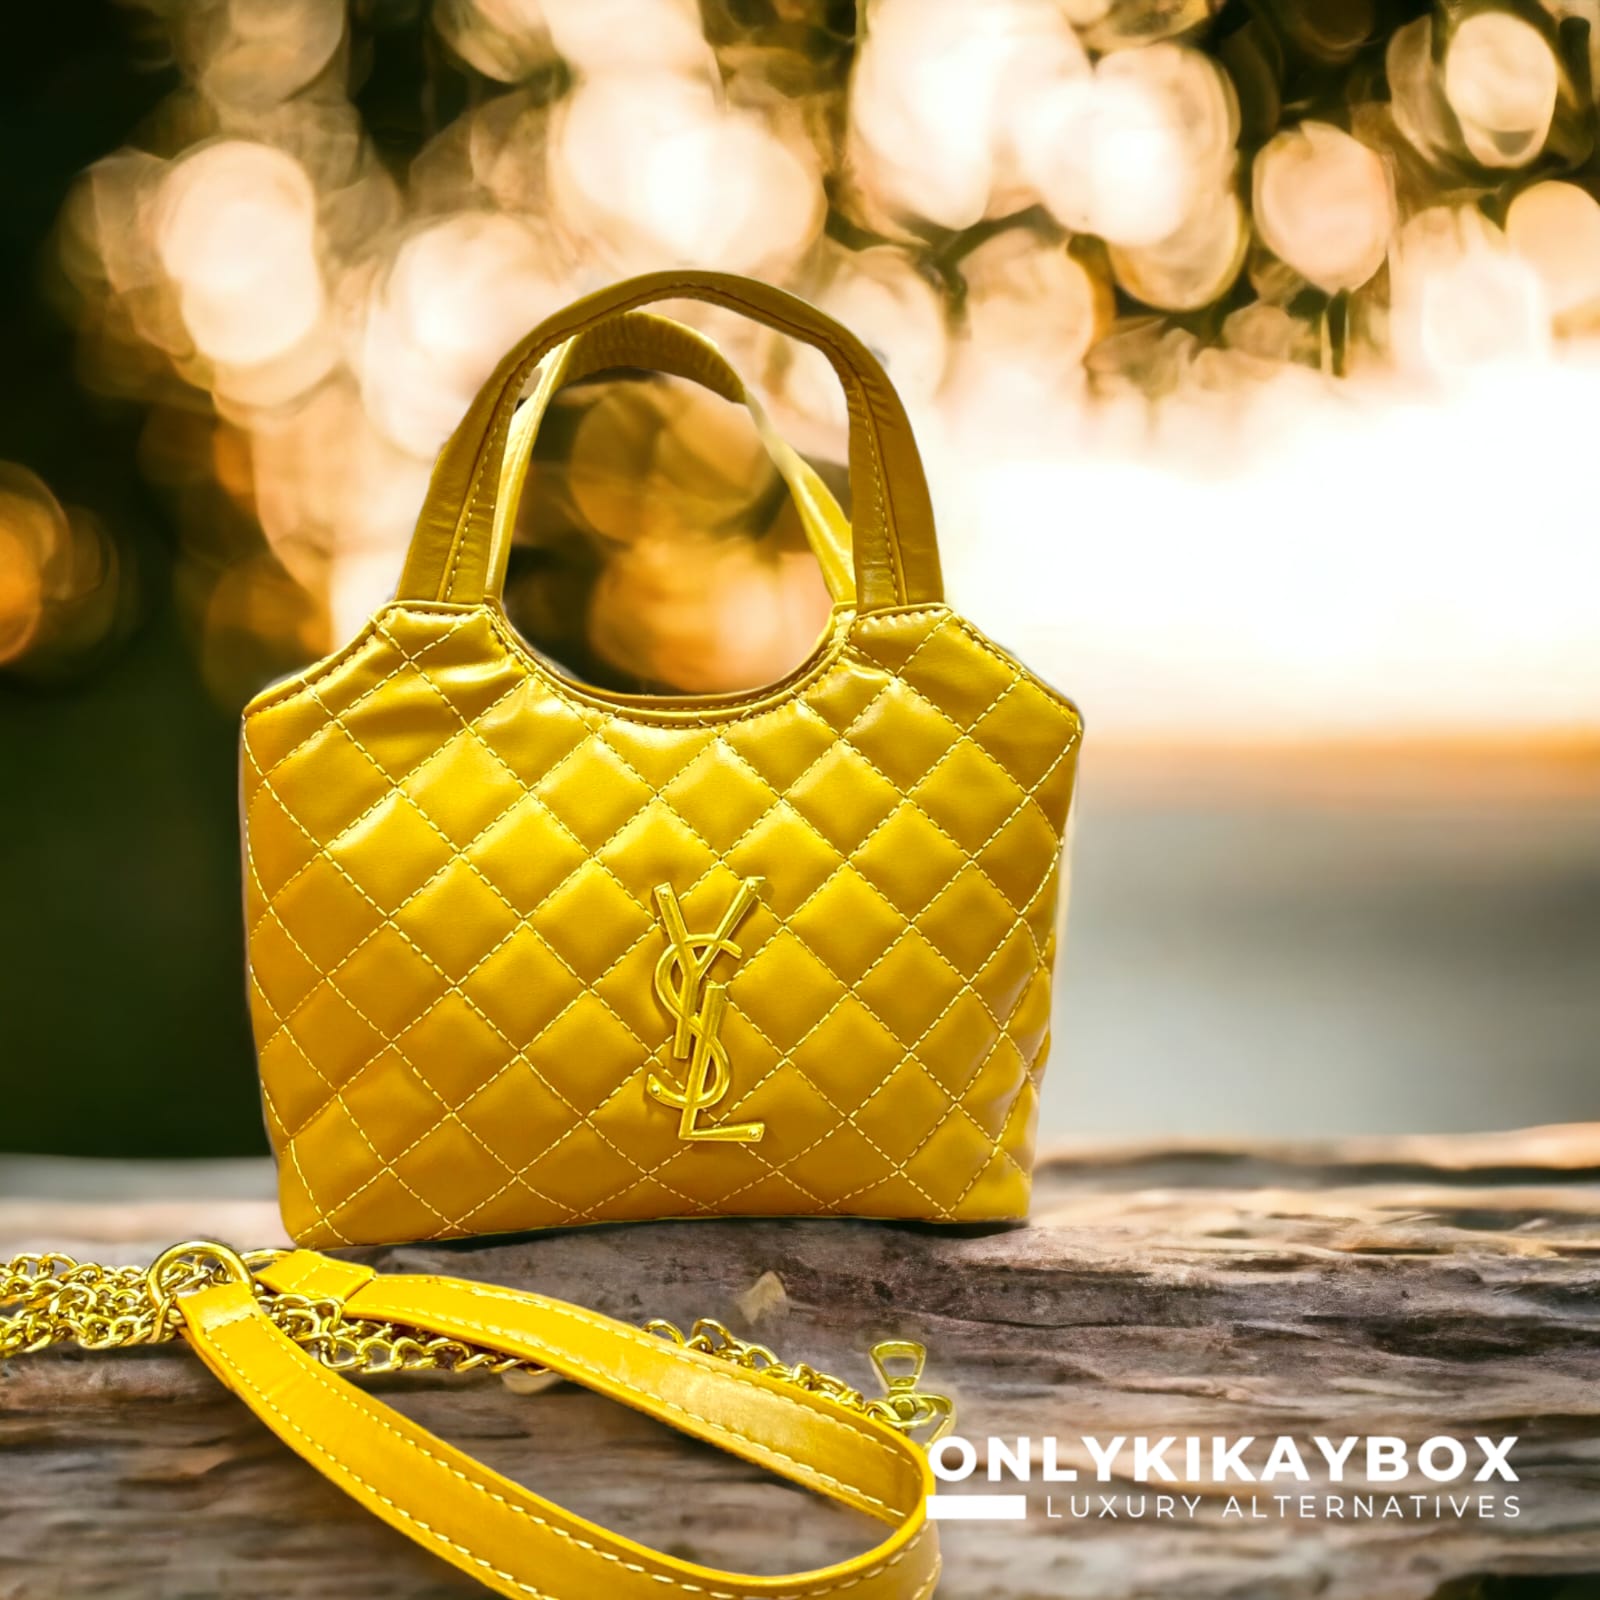 BXU YSL 016 Small iCare Sling Bag – Onlykikaybox